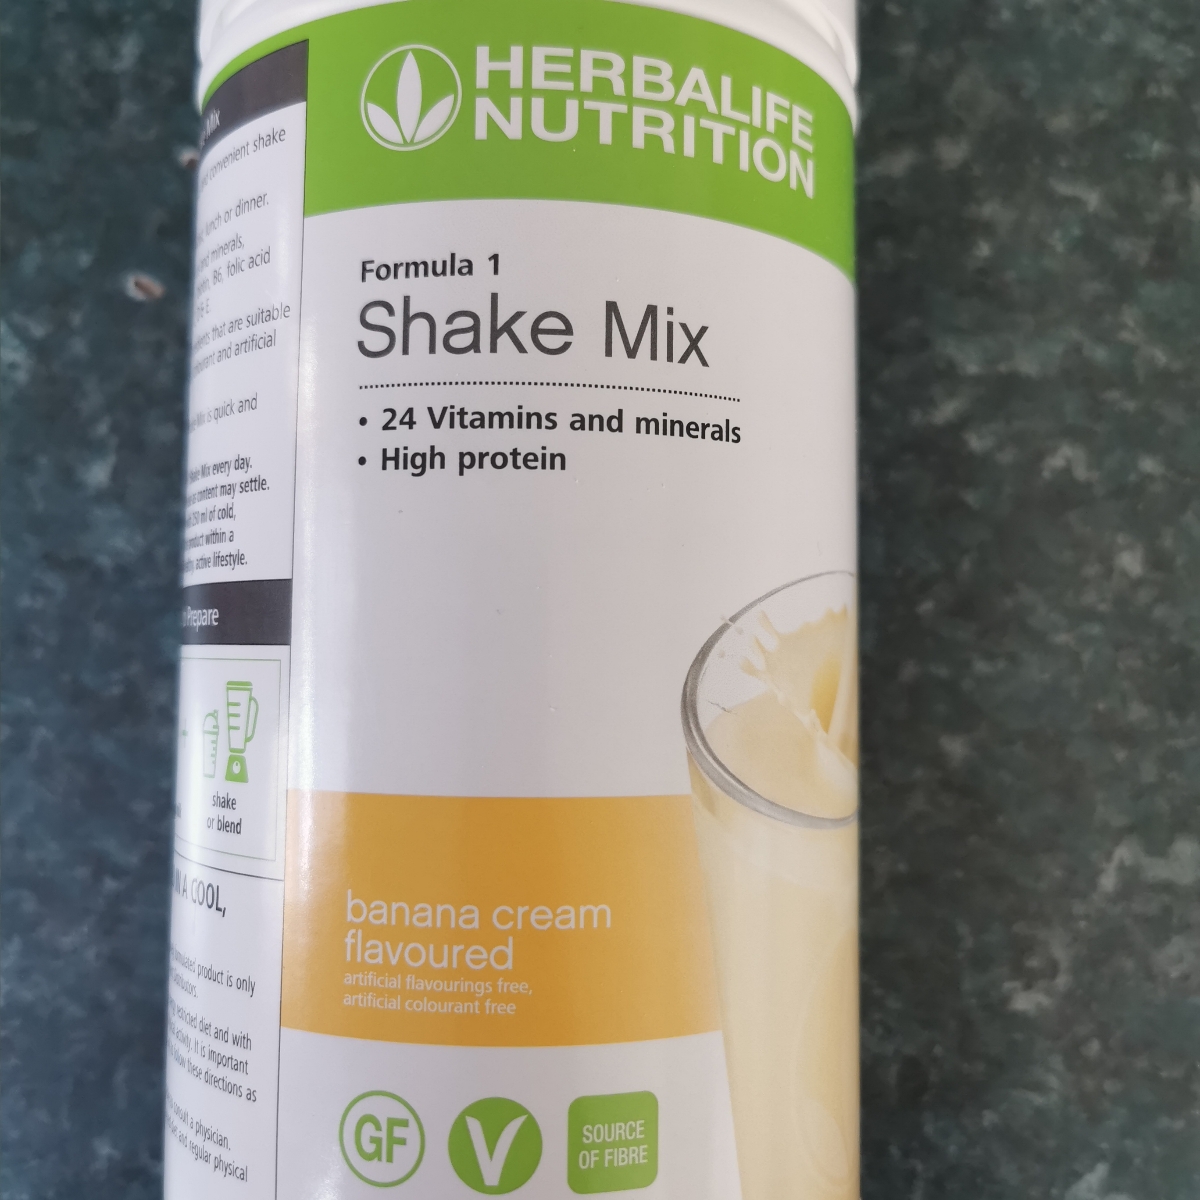 Herbalife Nutrition Formula 1 - Banana Cream Reviews | abillion